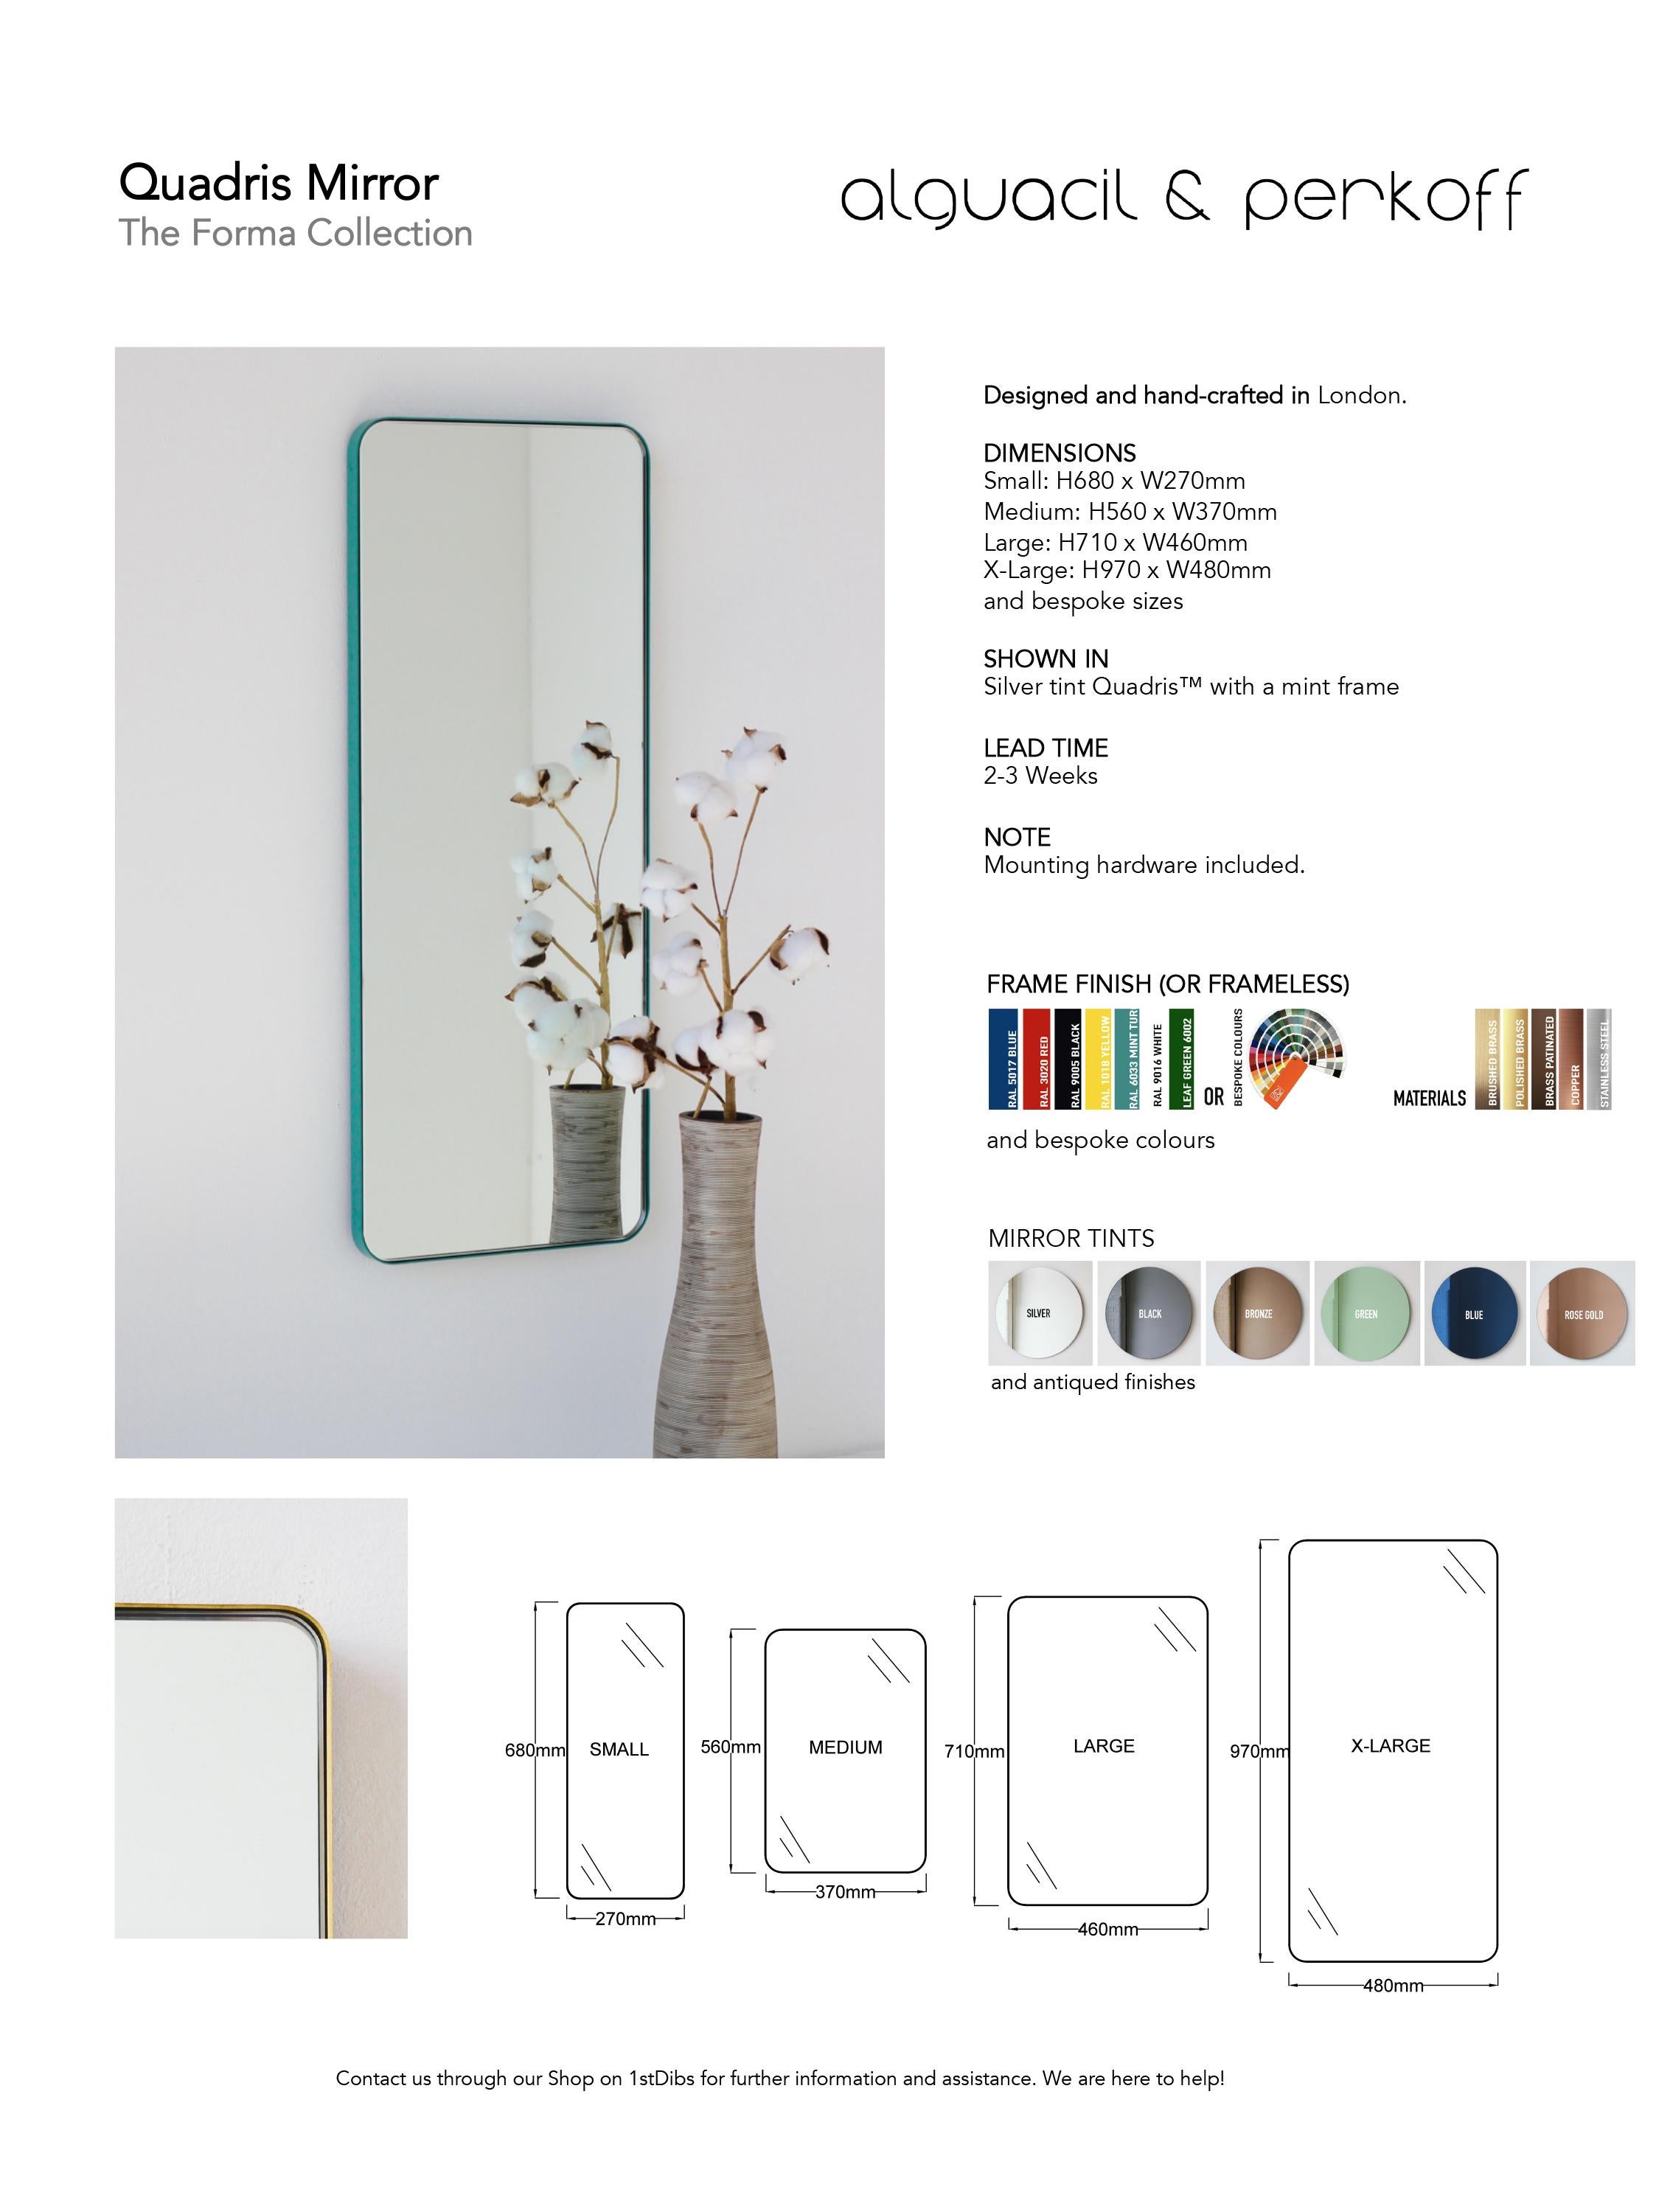 Quadris Rose Gold Rectangular Frameless Contemporary Mirror, Large For Sale 5